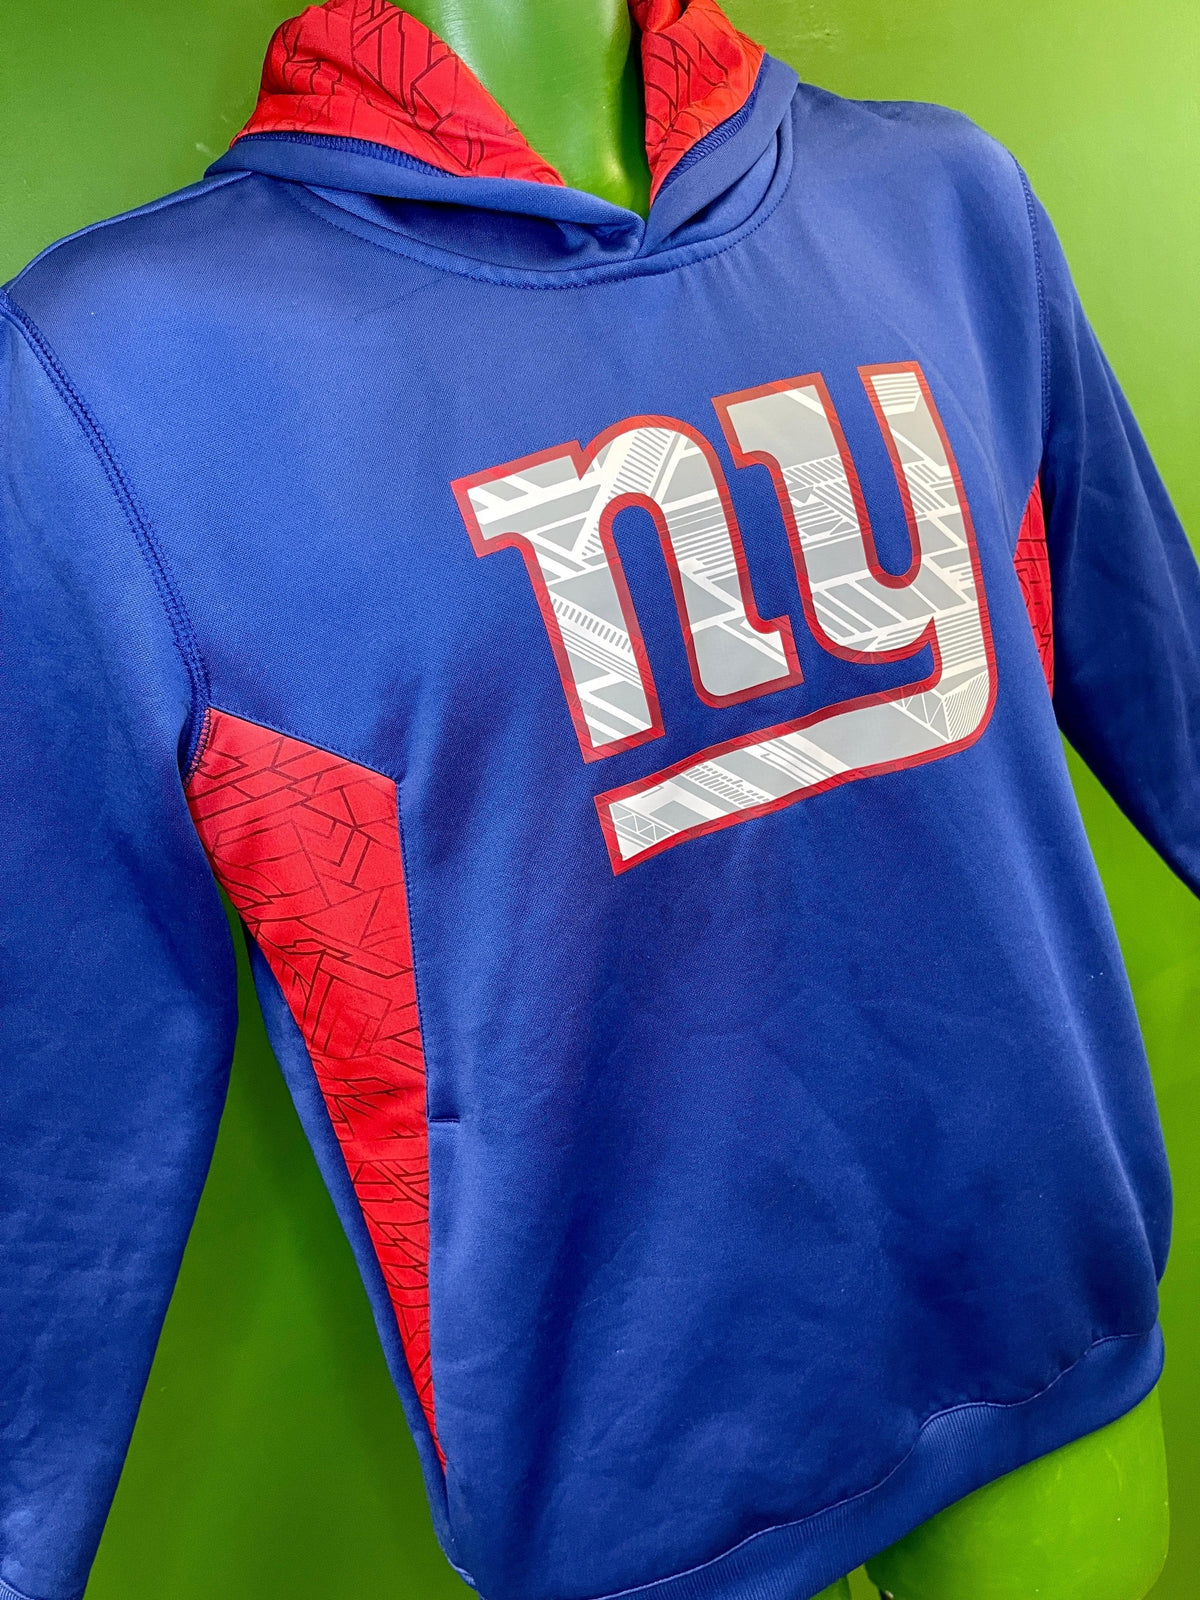 NFL New York Giants Pullover Hoodie Sweatshirt Youth Large 14-16